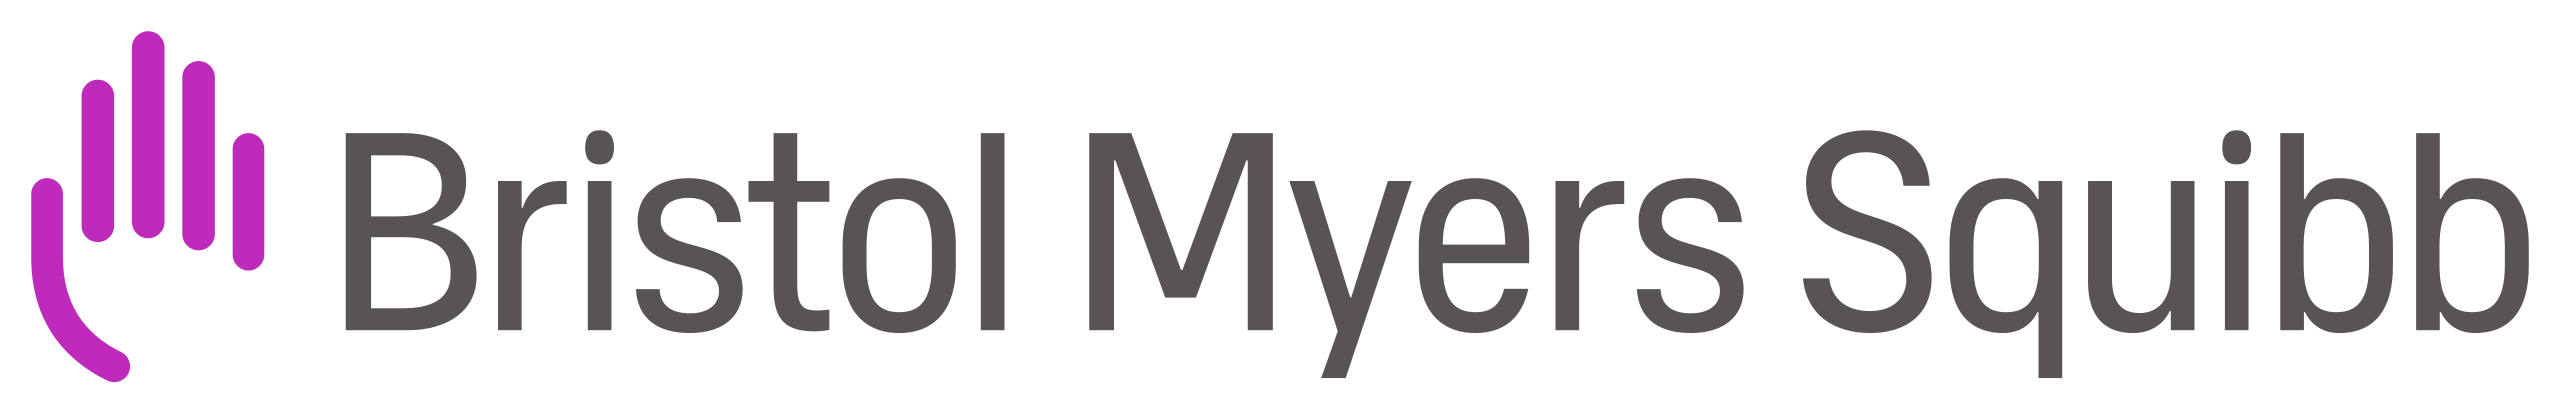 Bristol-Myers_Squibb_logo_(2020)